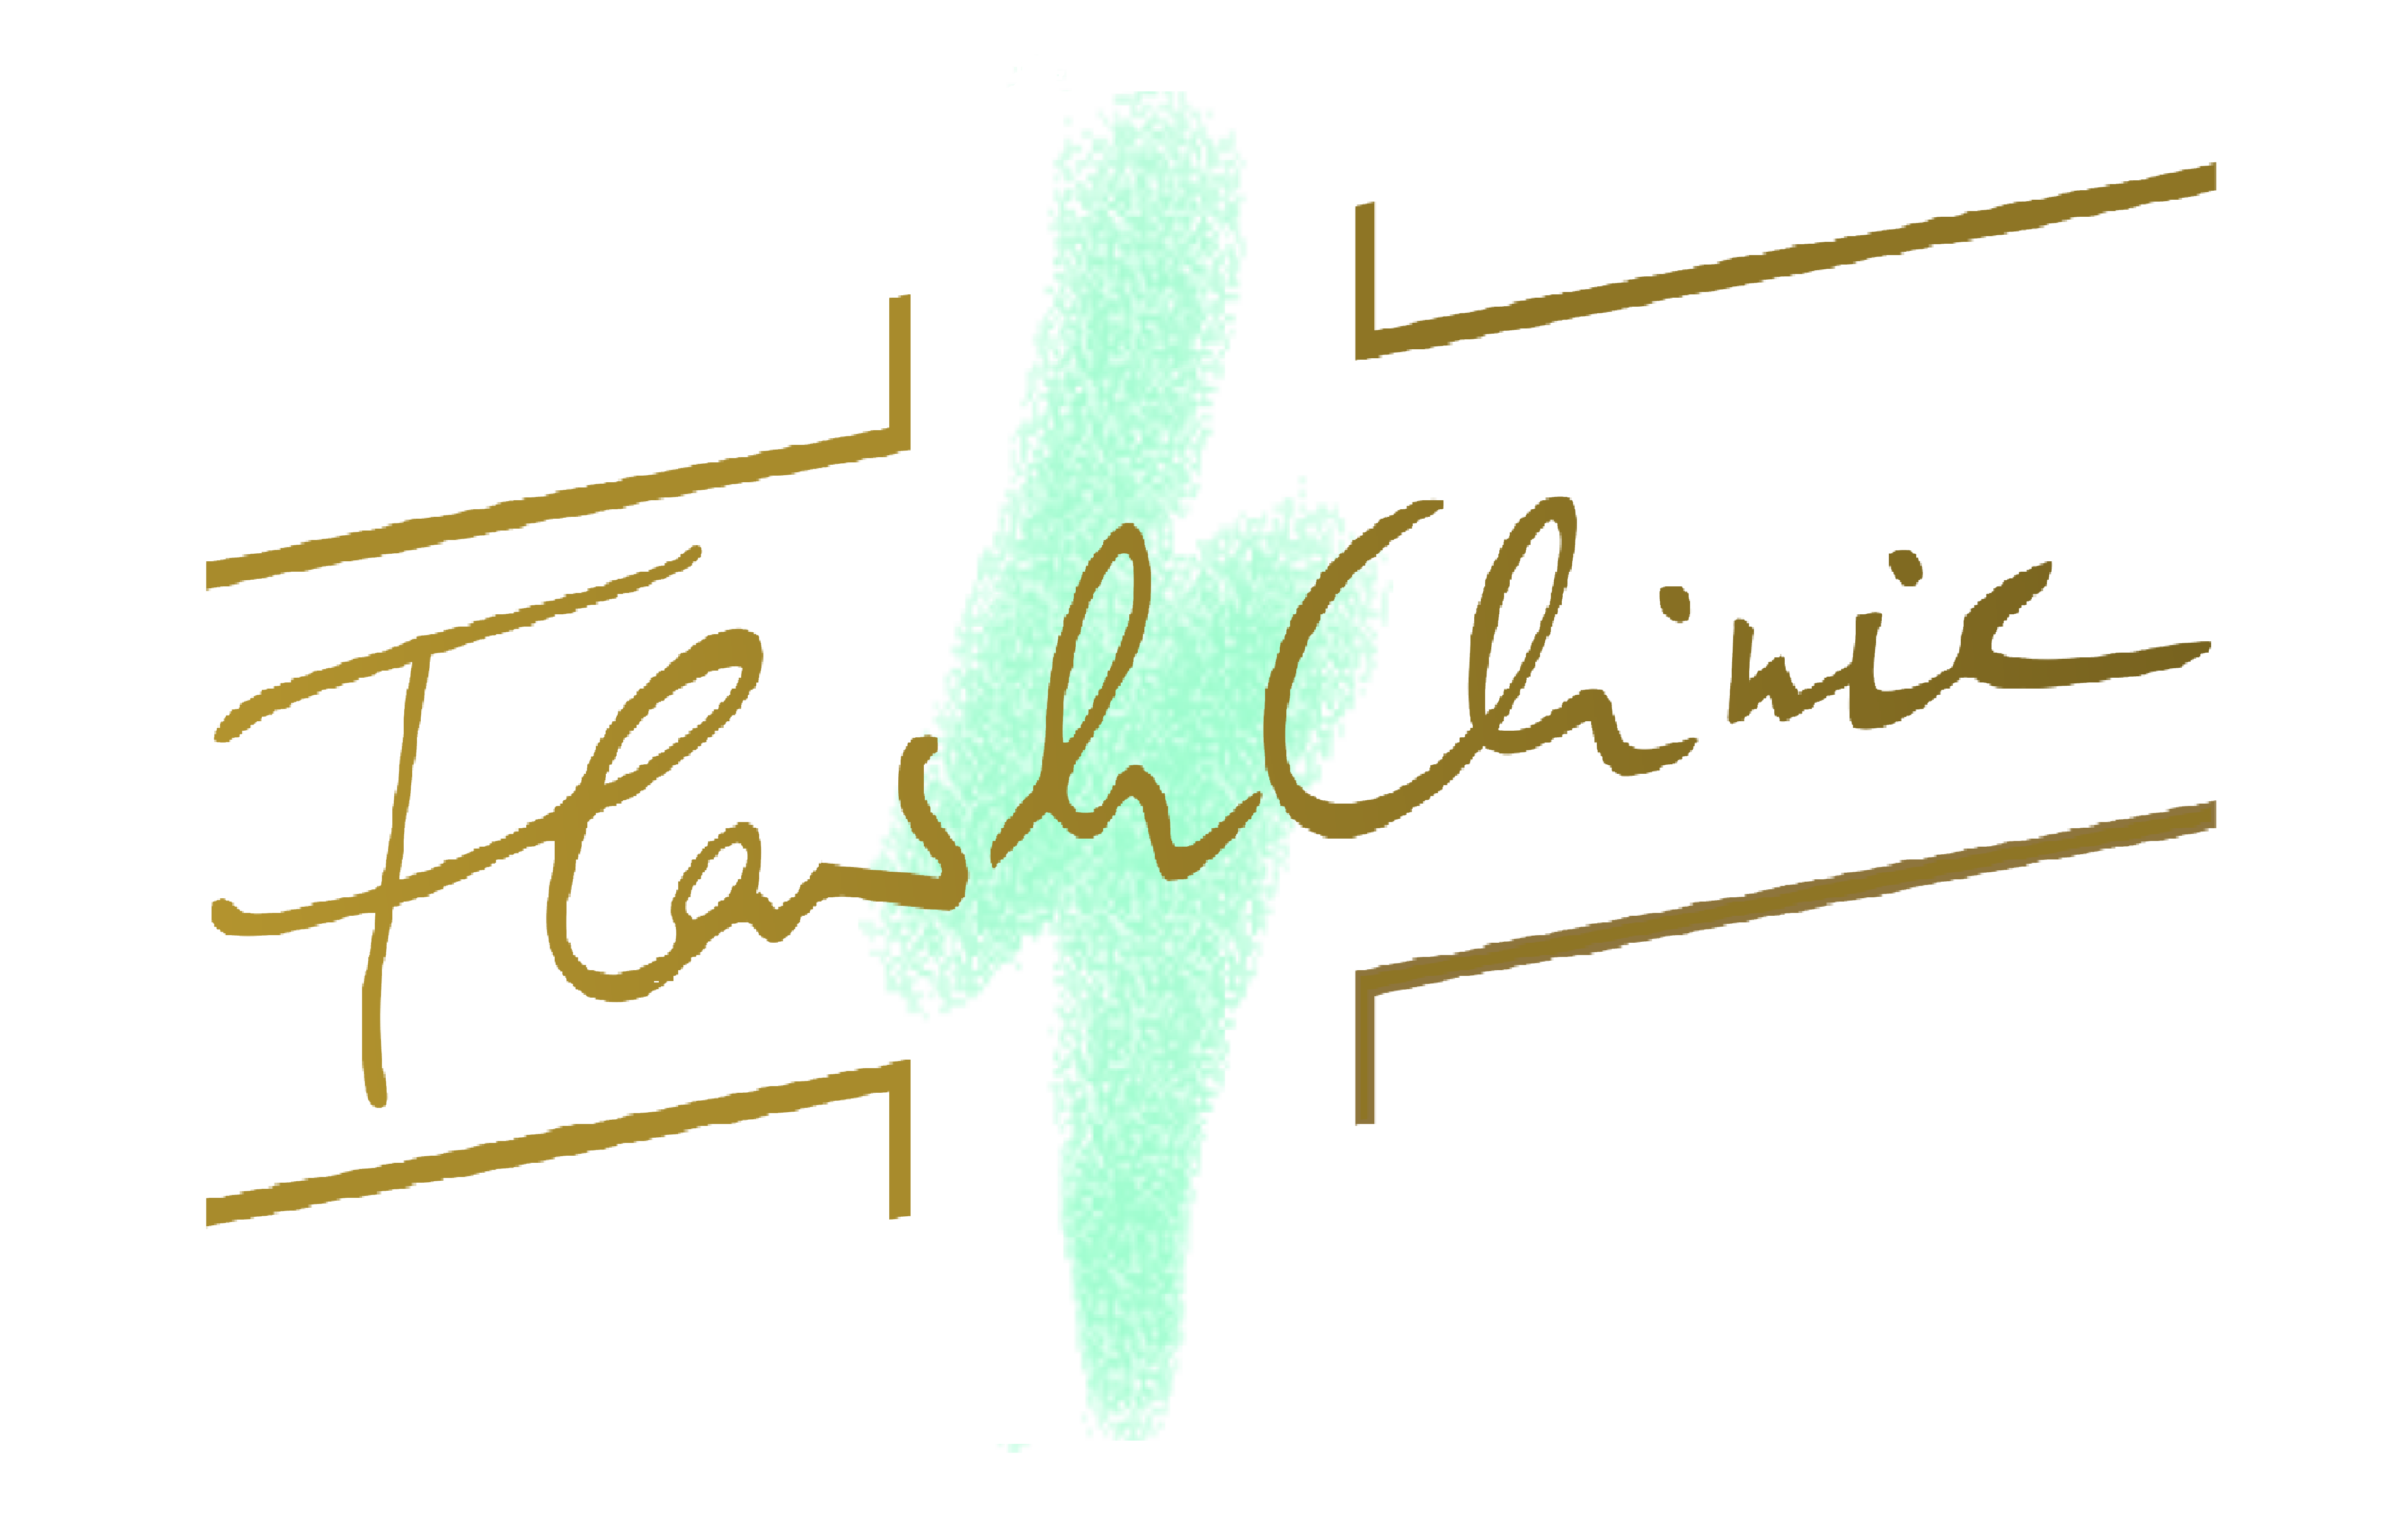 Flash Clinic